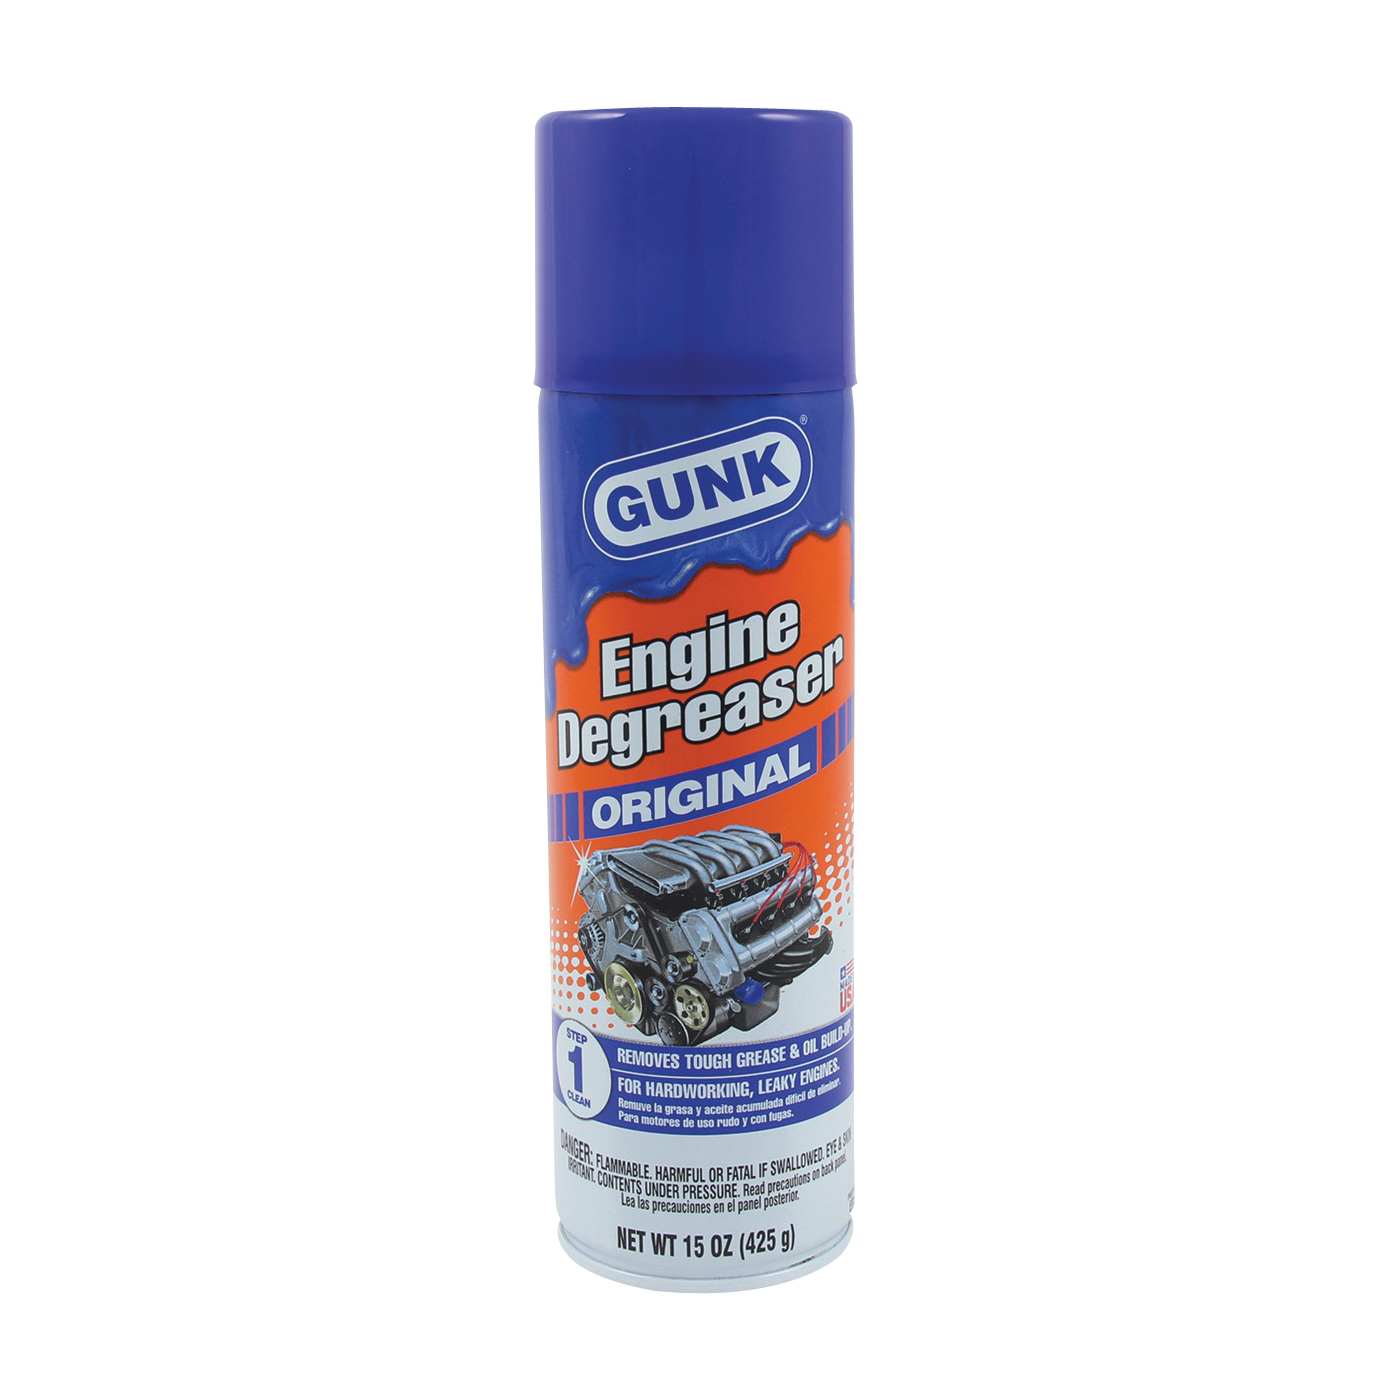 GUNK EB1 Engine Degreaser, 15 oz, Liquid, Diesel Fuel - 1